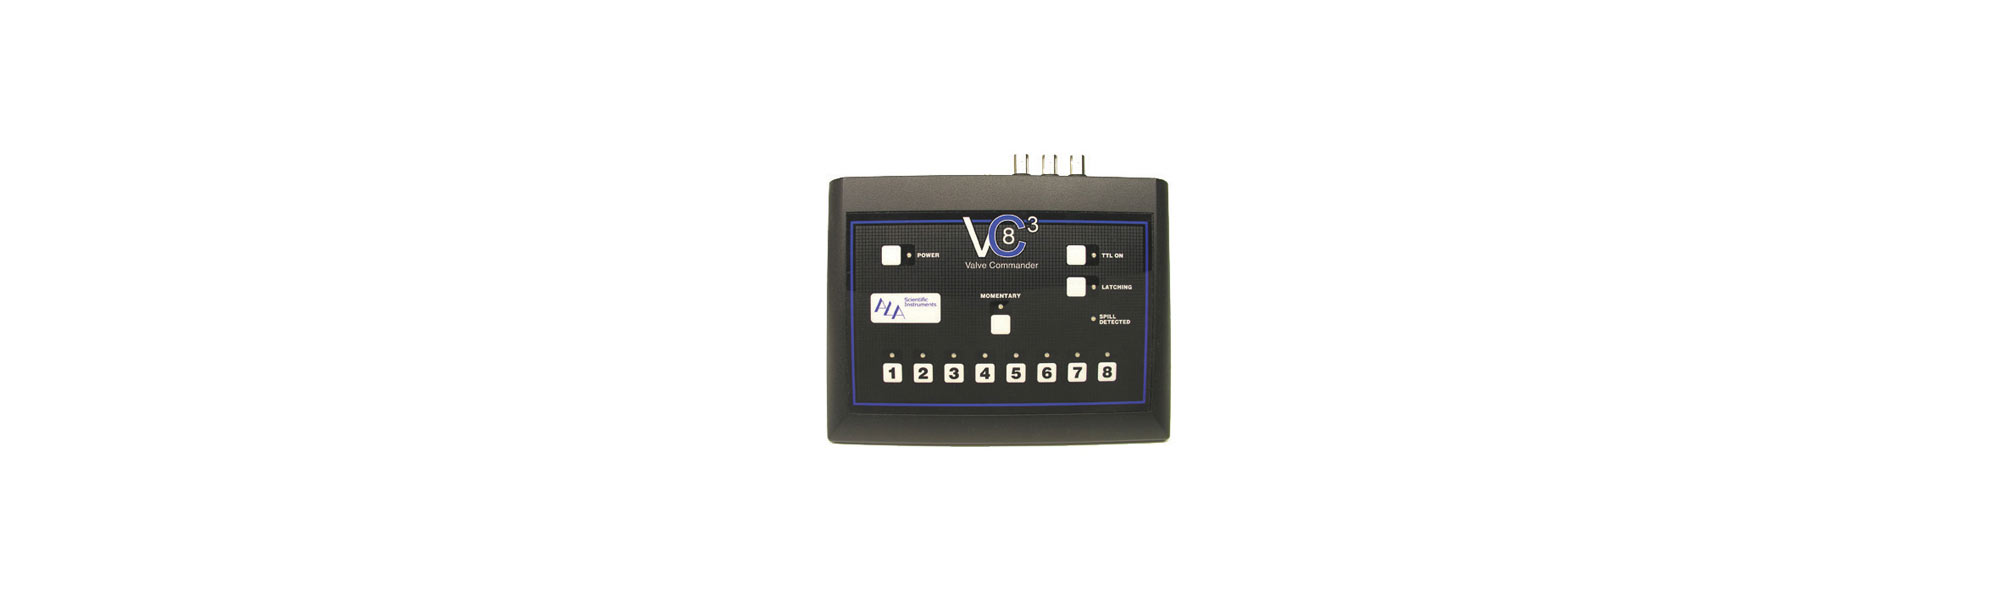 ALA Scientific Instruments VC3 8 controller